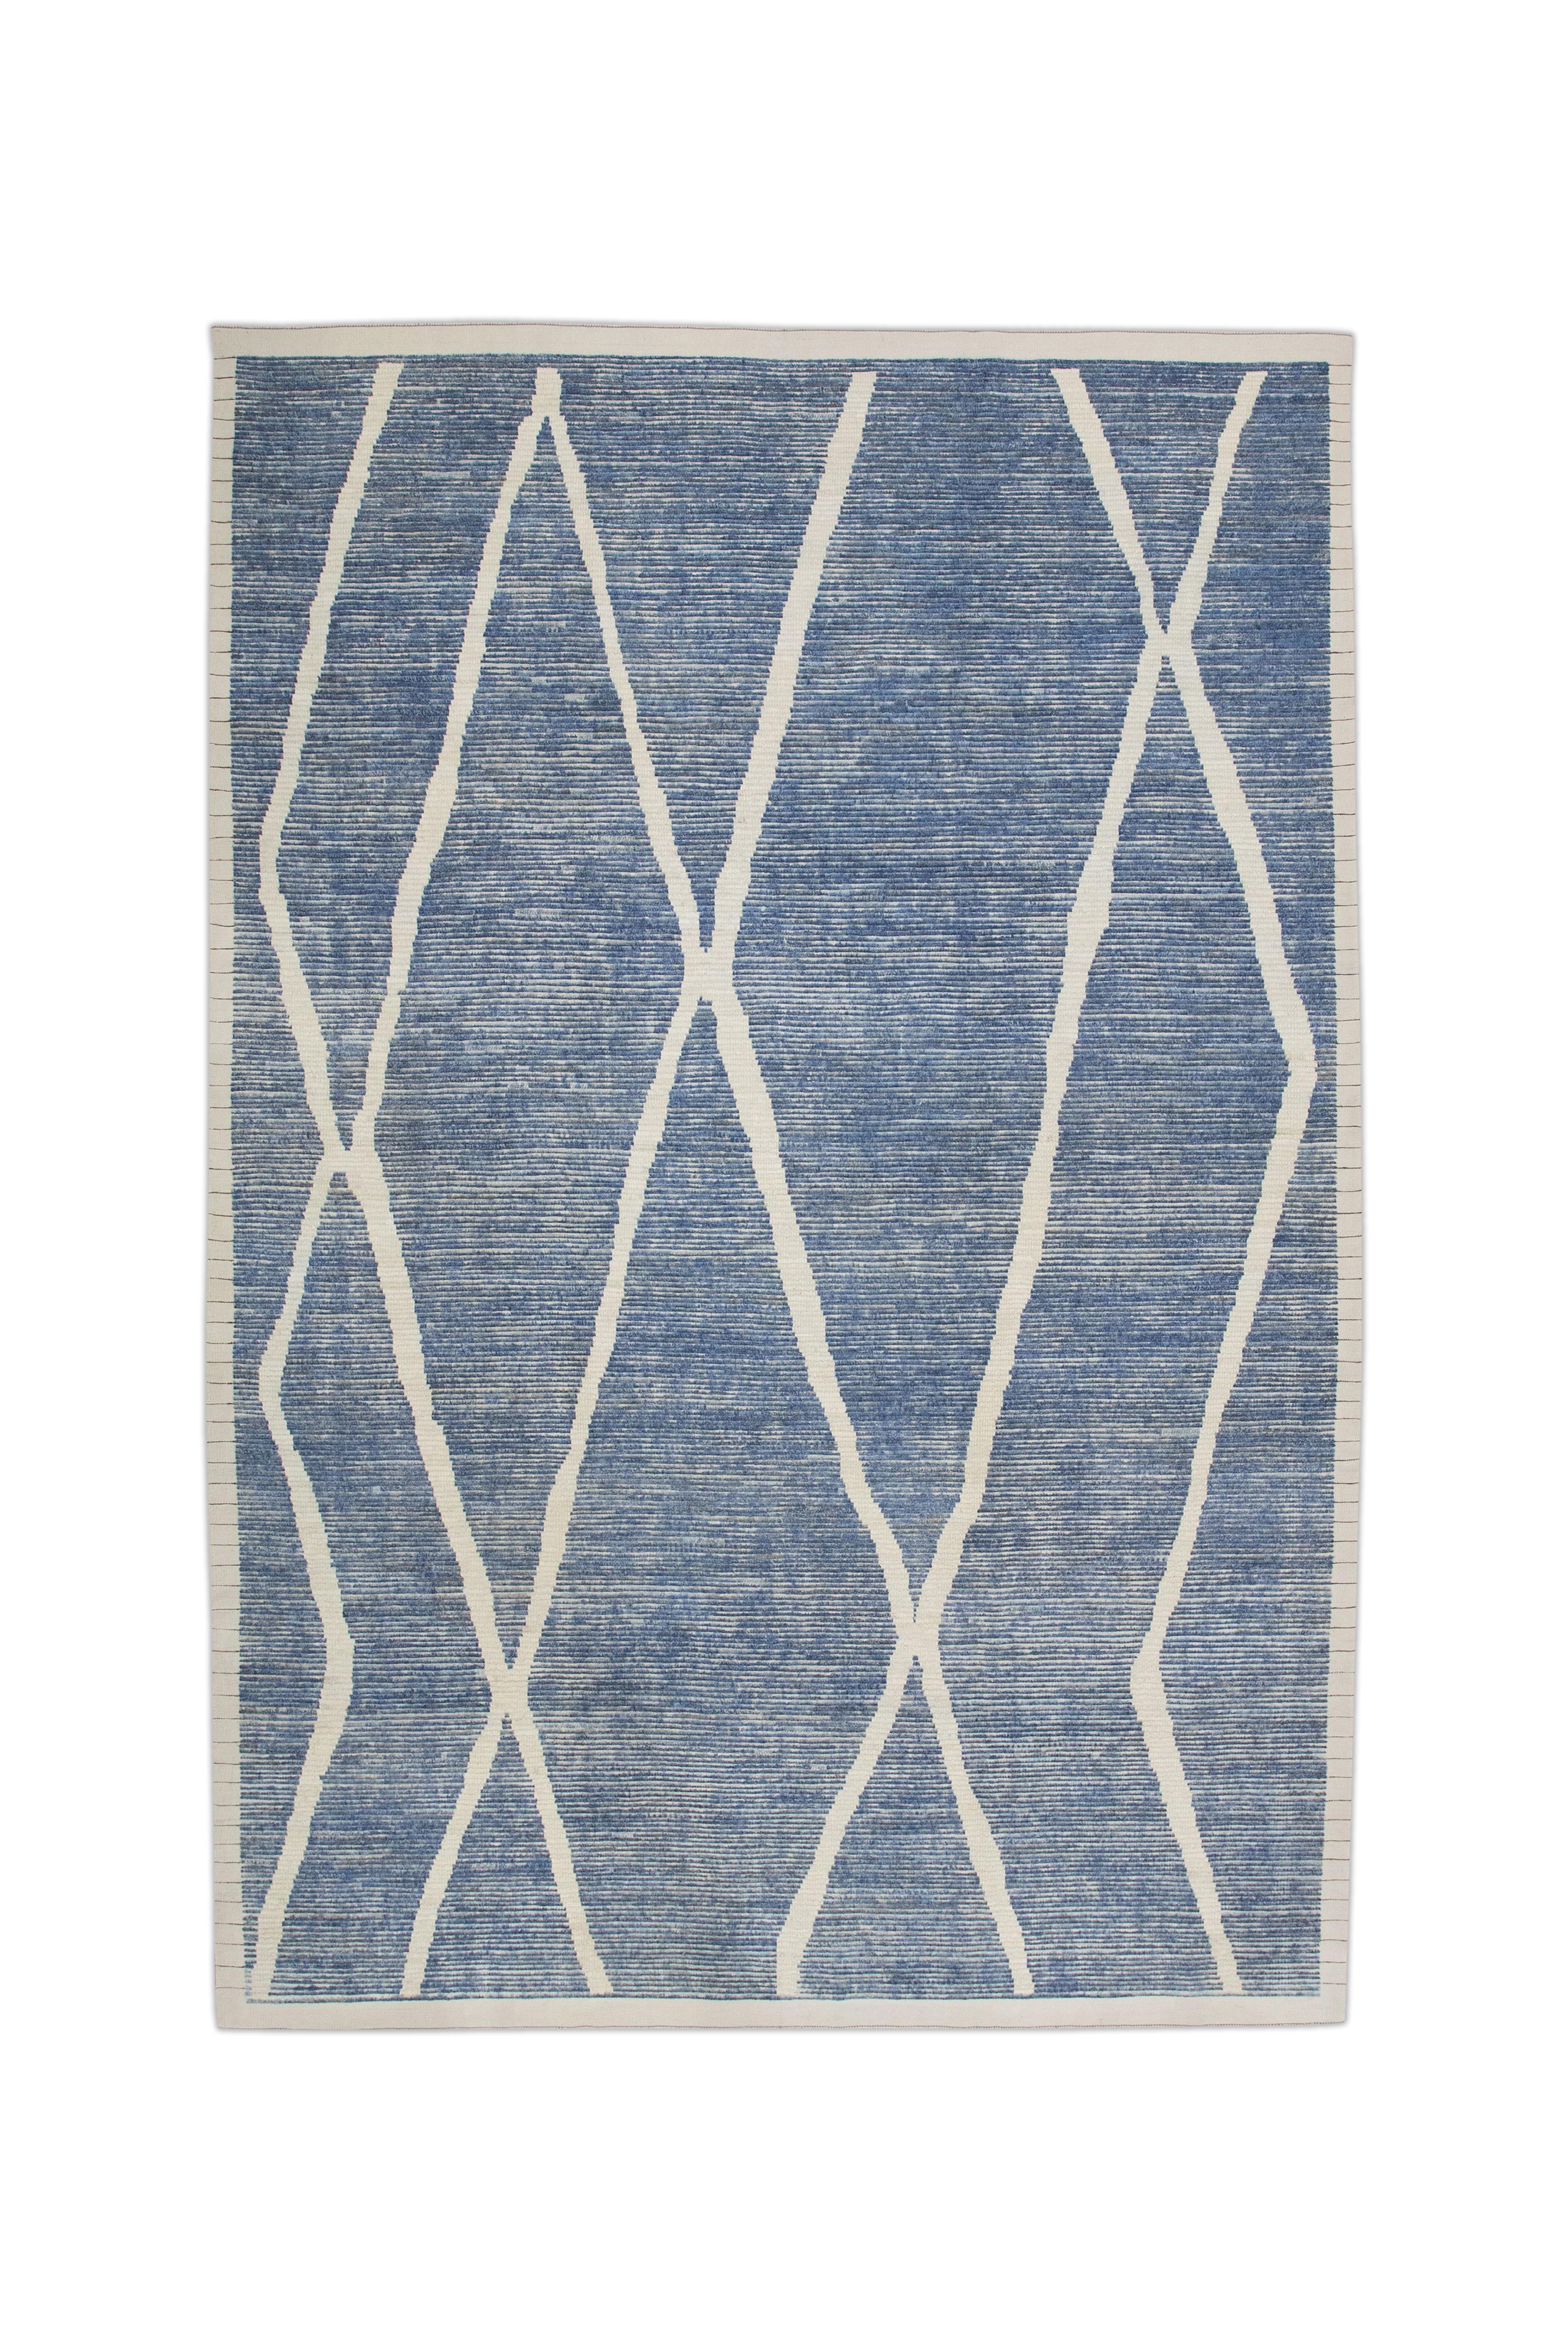  Handmade Wool Tulu Rug in Geometric Design 8'11" x 12'9" For Sale